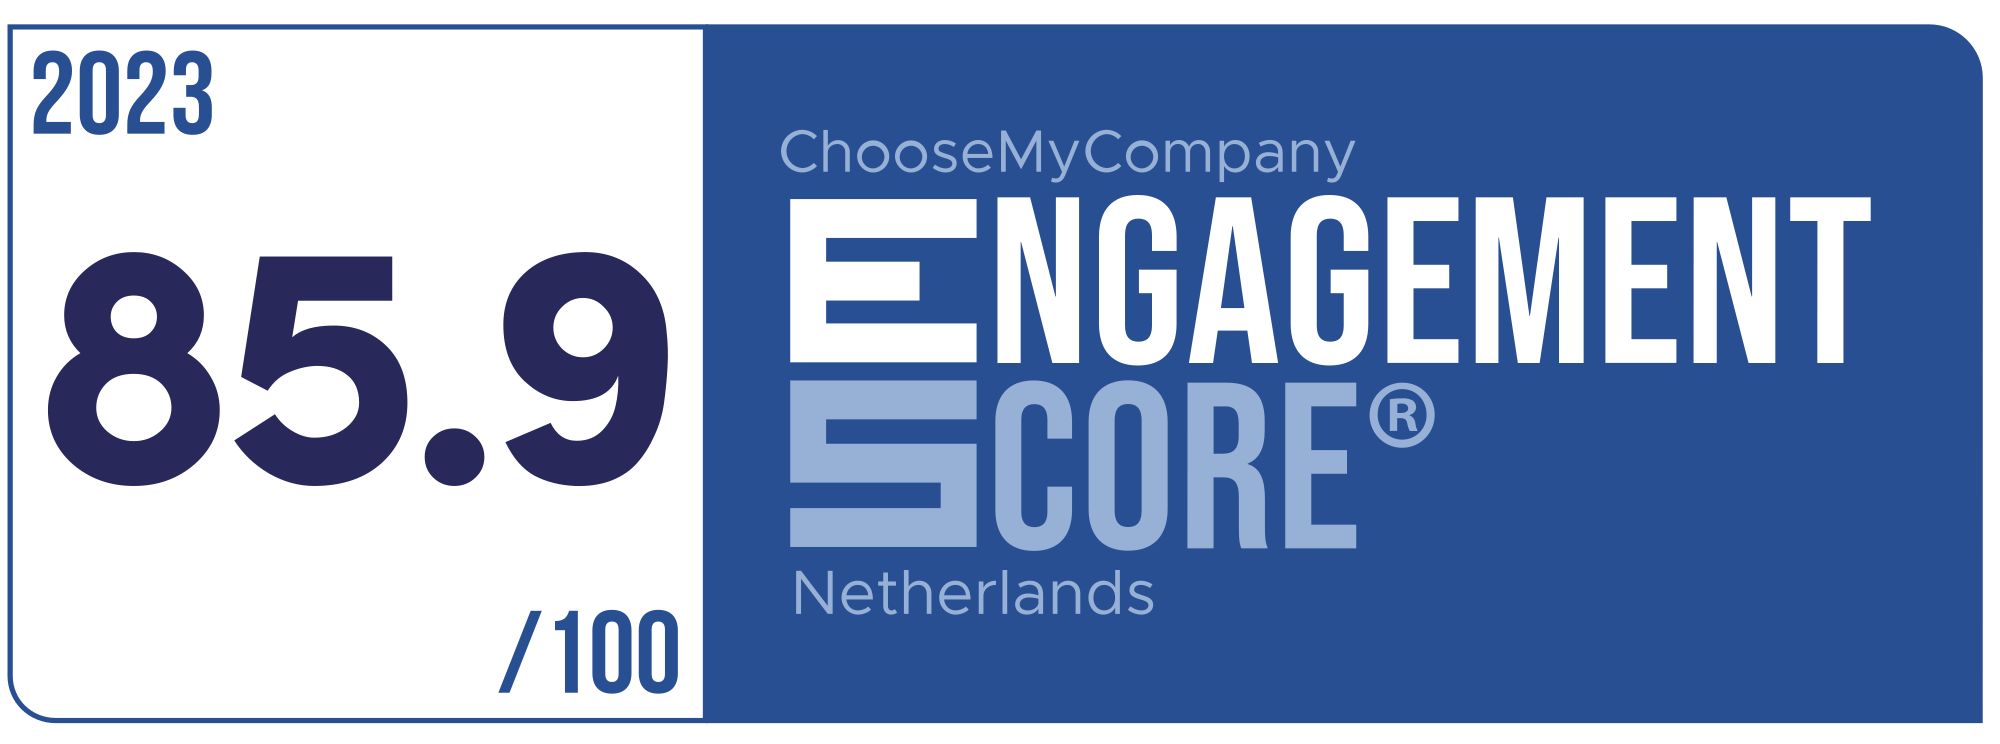 Label Engagement Score 2023 Netherlands